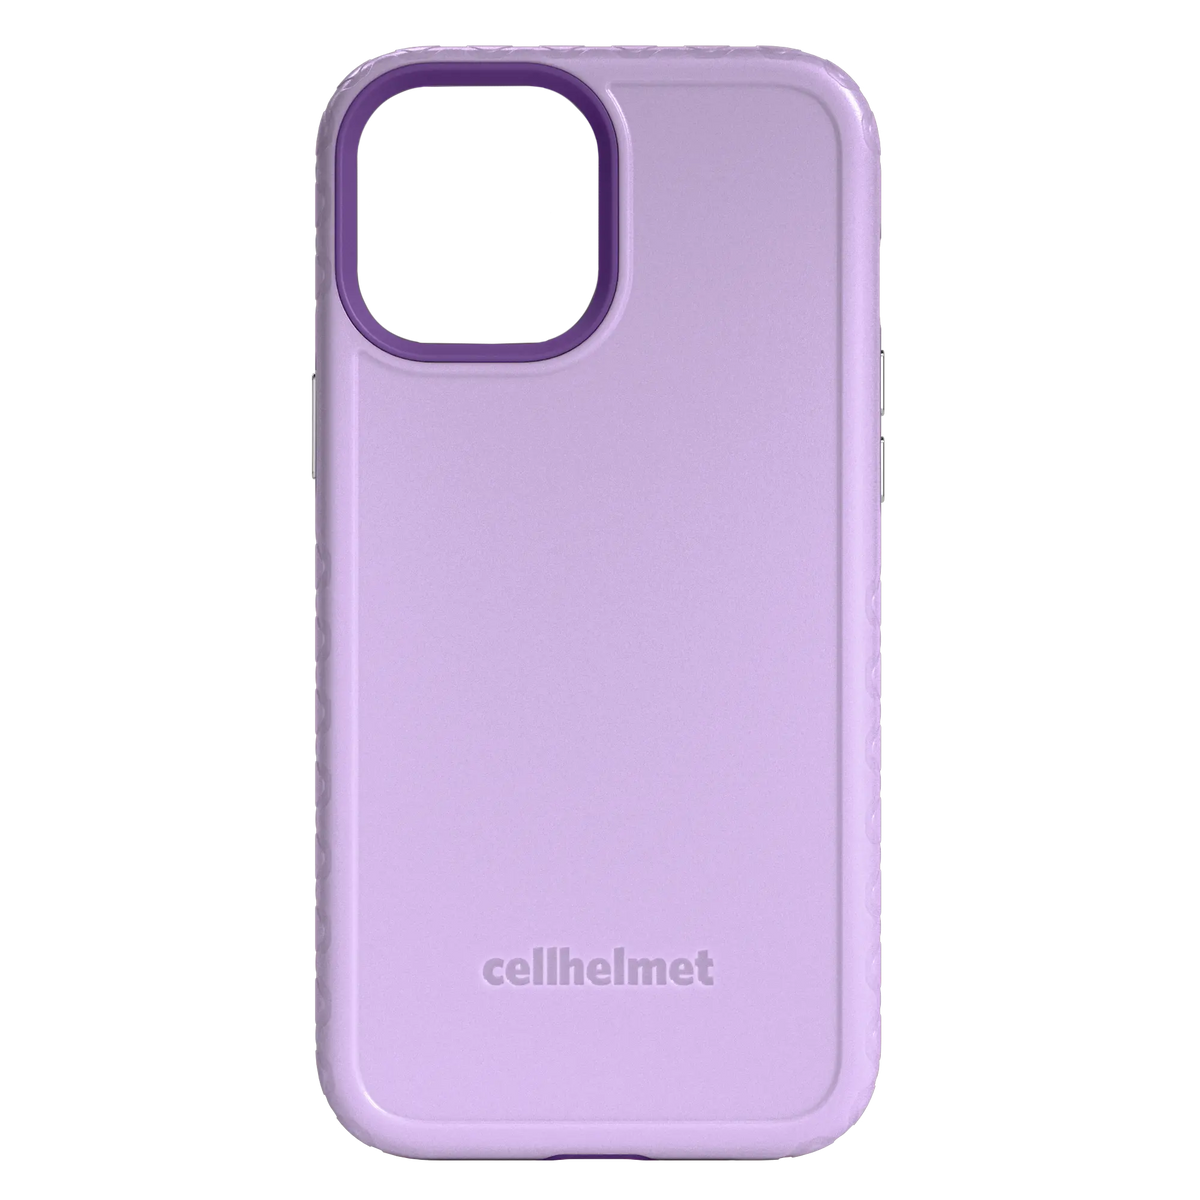 Purple cellhelmet Customizable Case for iPhone 12 Pro Max